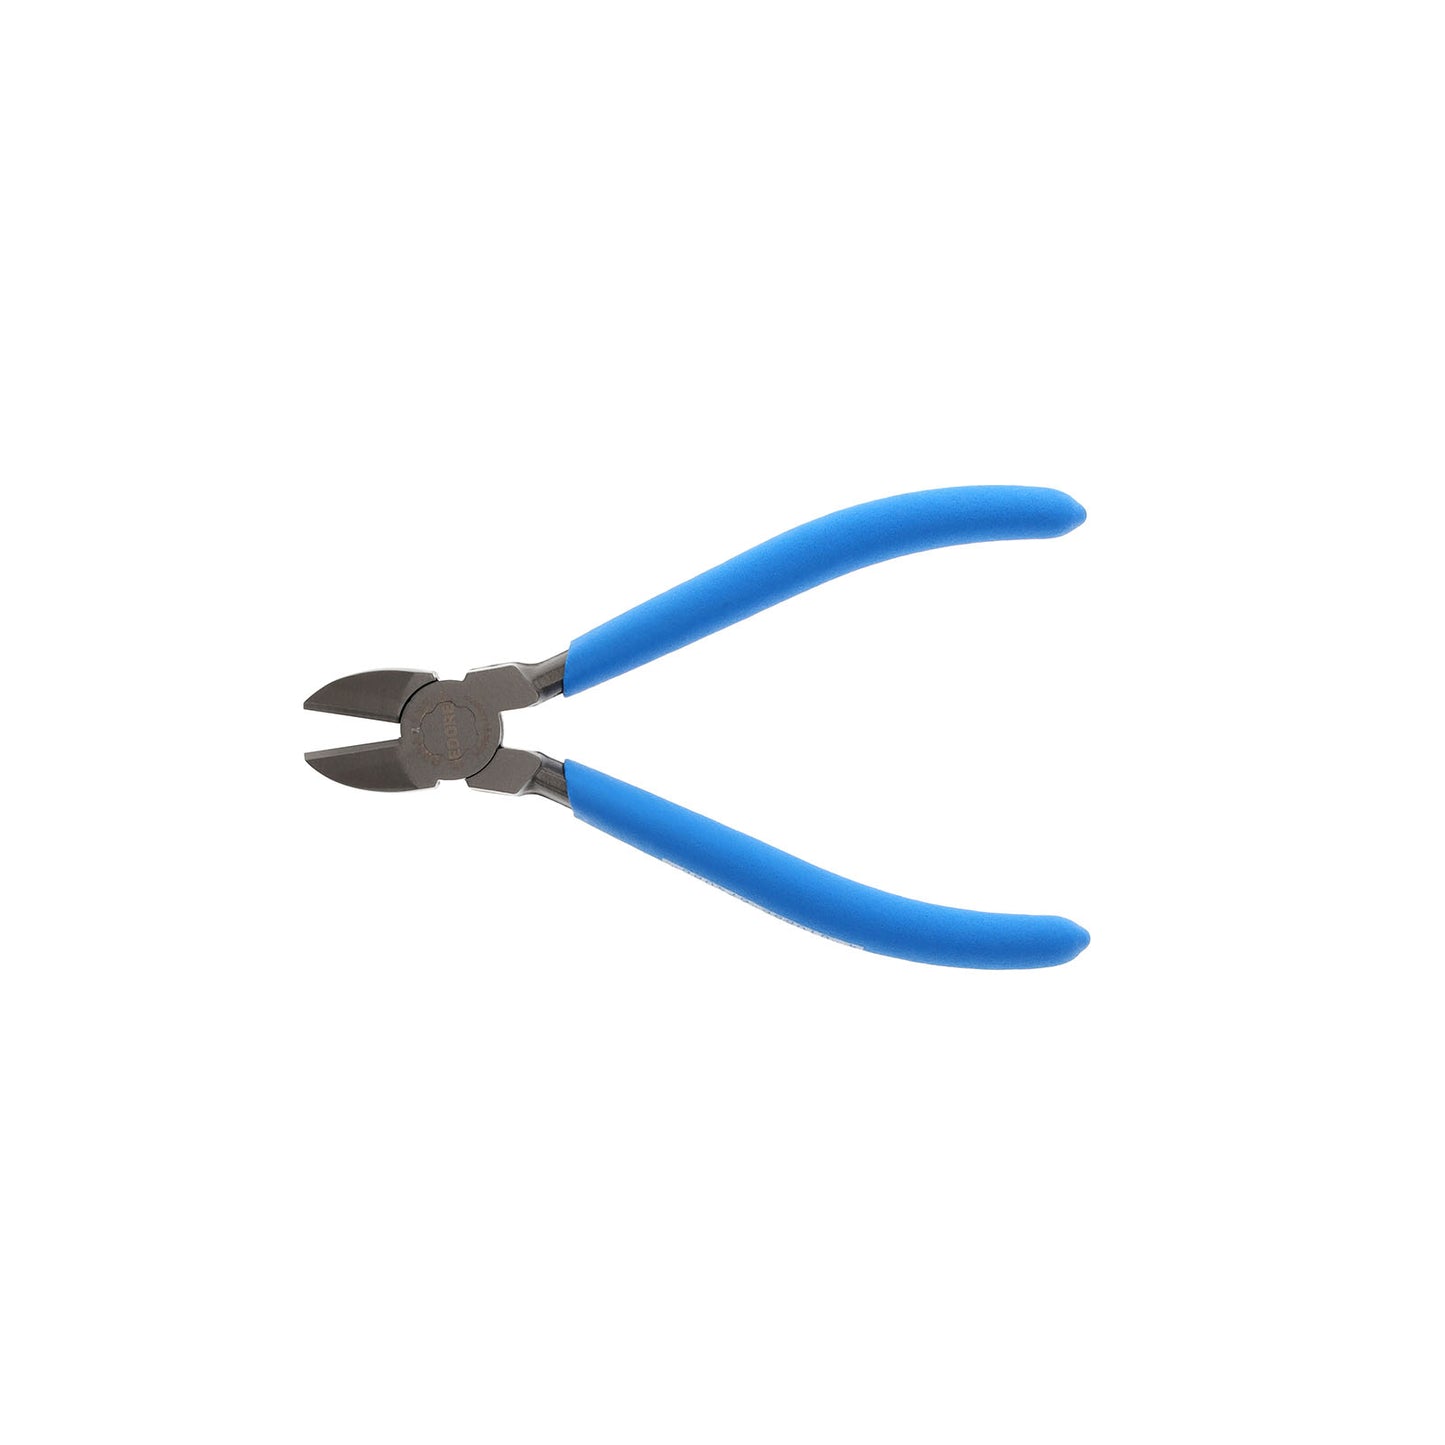 GEDORE 8314-125 TL - Diagonal cutting pliers 125 mm (6740870)